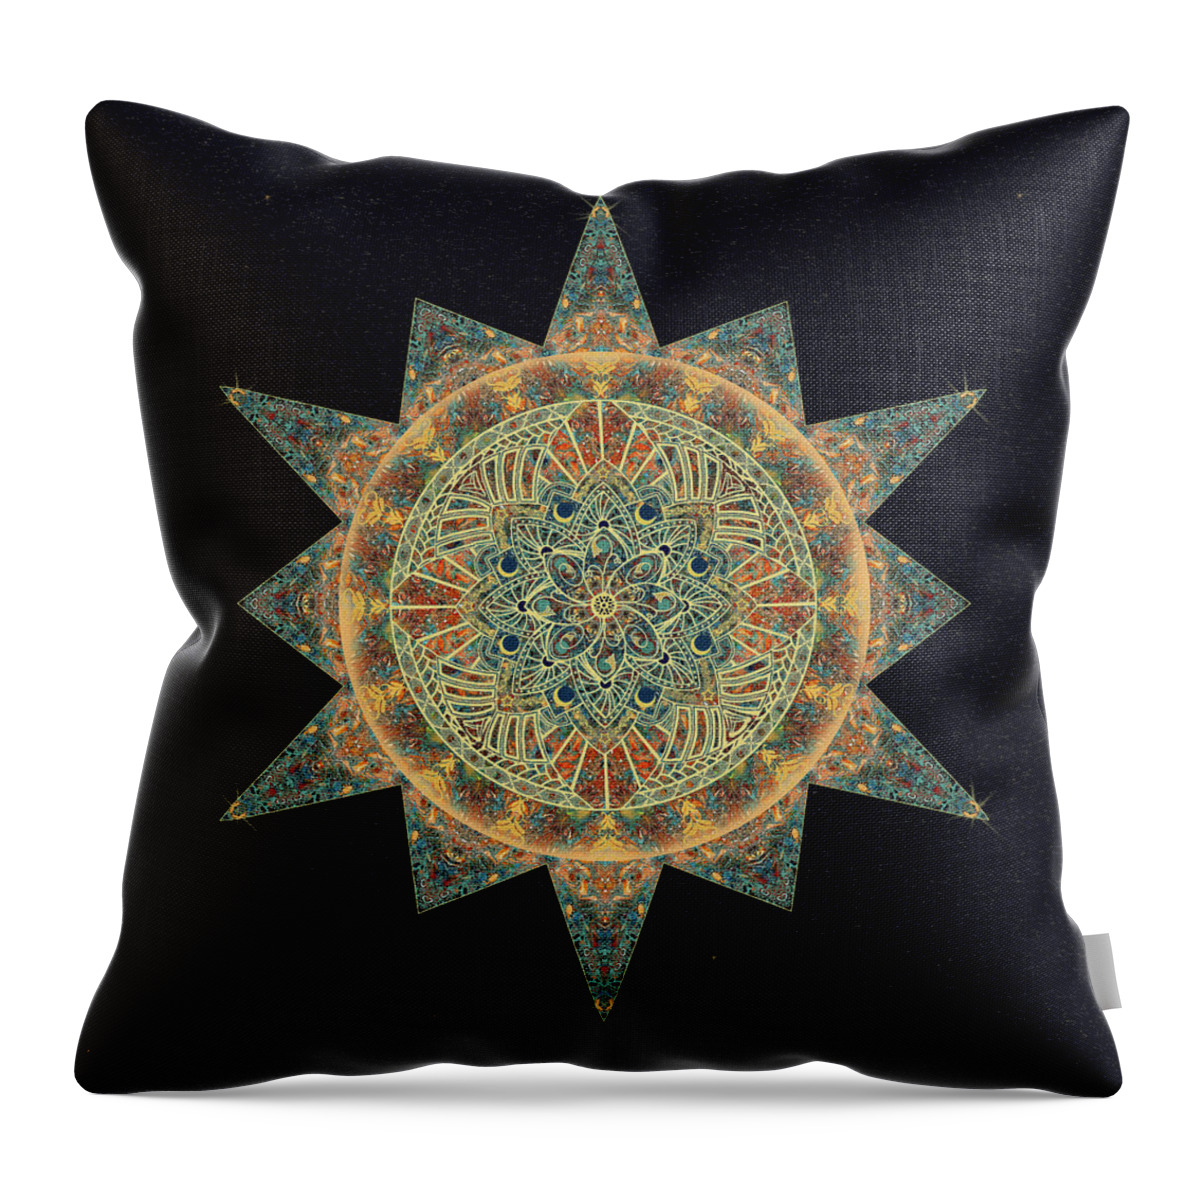 Art Throw Pillow featuring the digital art Life Star Mandala by Deborah Smith